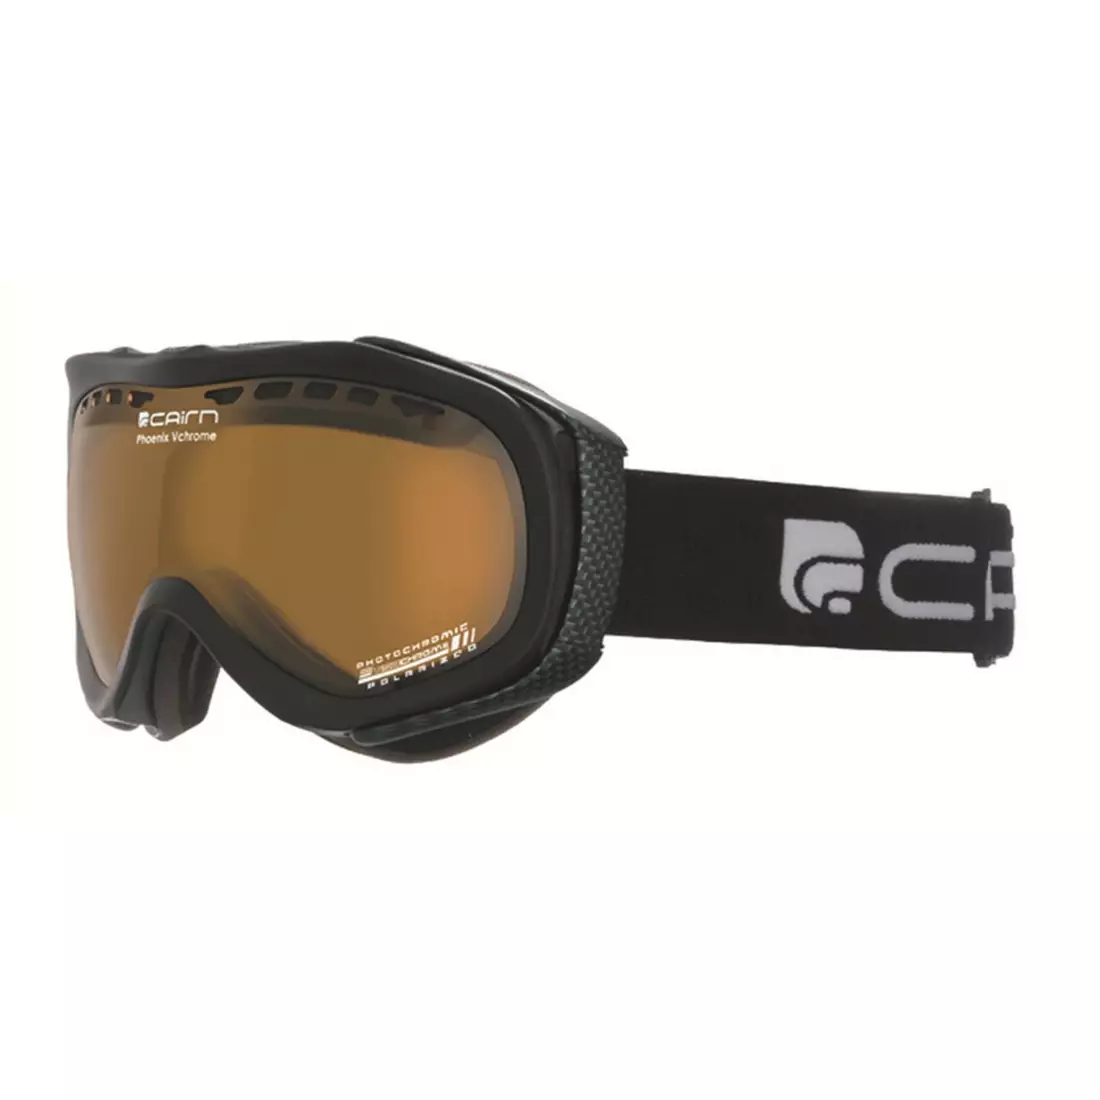 CAIRN lyžiarske/snowboardové okuliare Phoenix VCHROME 202, black, 580628202